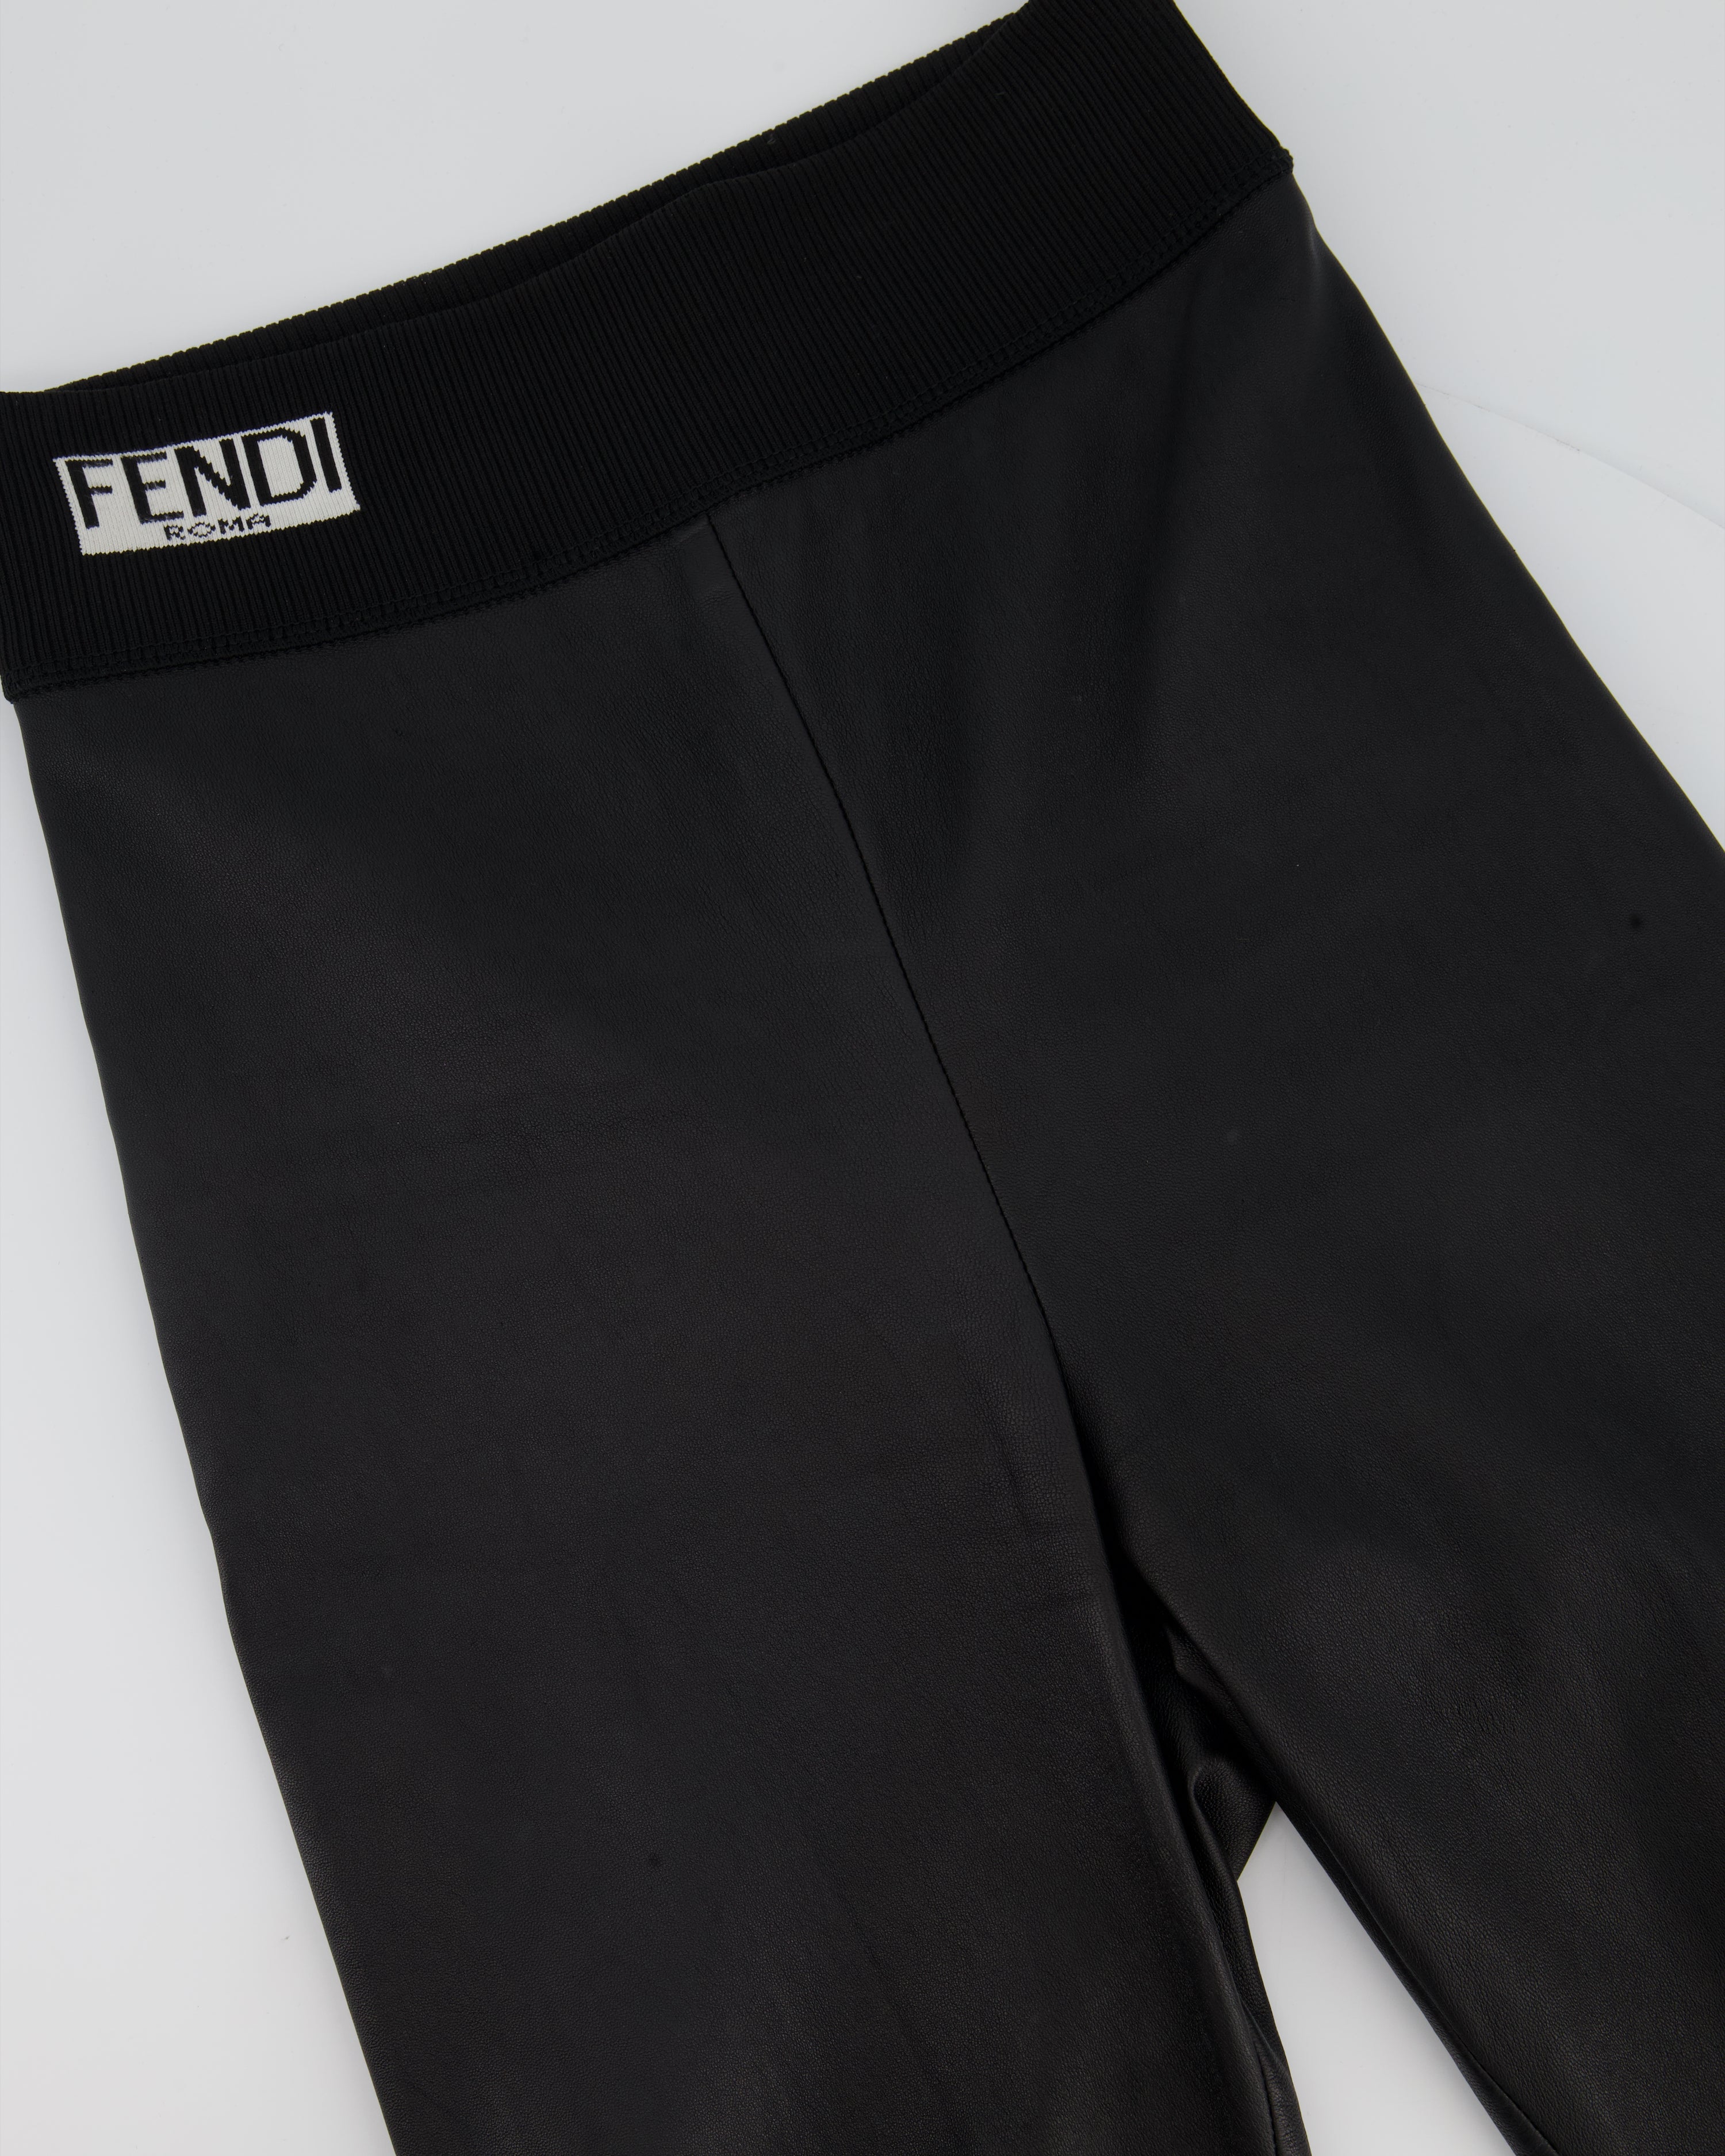 Fendi Black Leather Legging with Logo Print Detailing IT 40 (UK 8) – Sellier